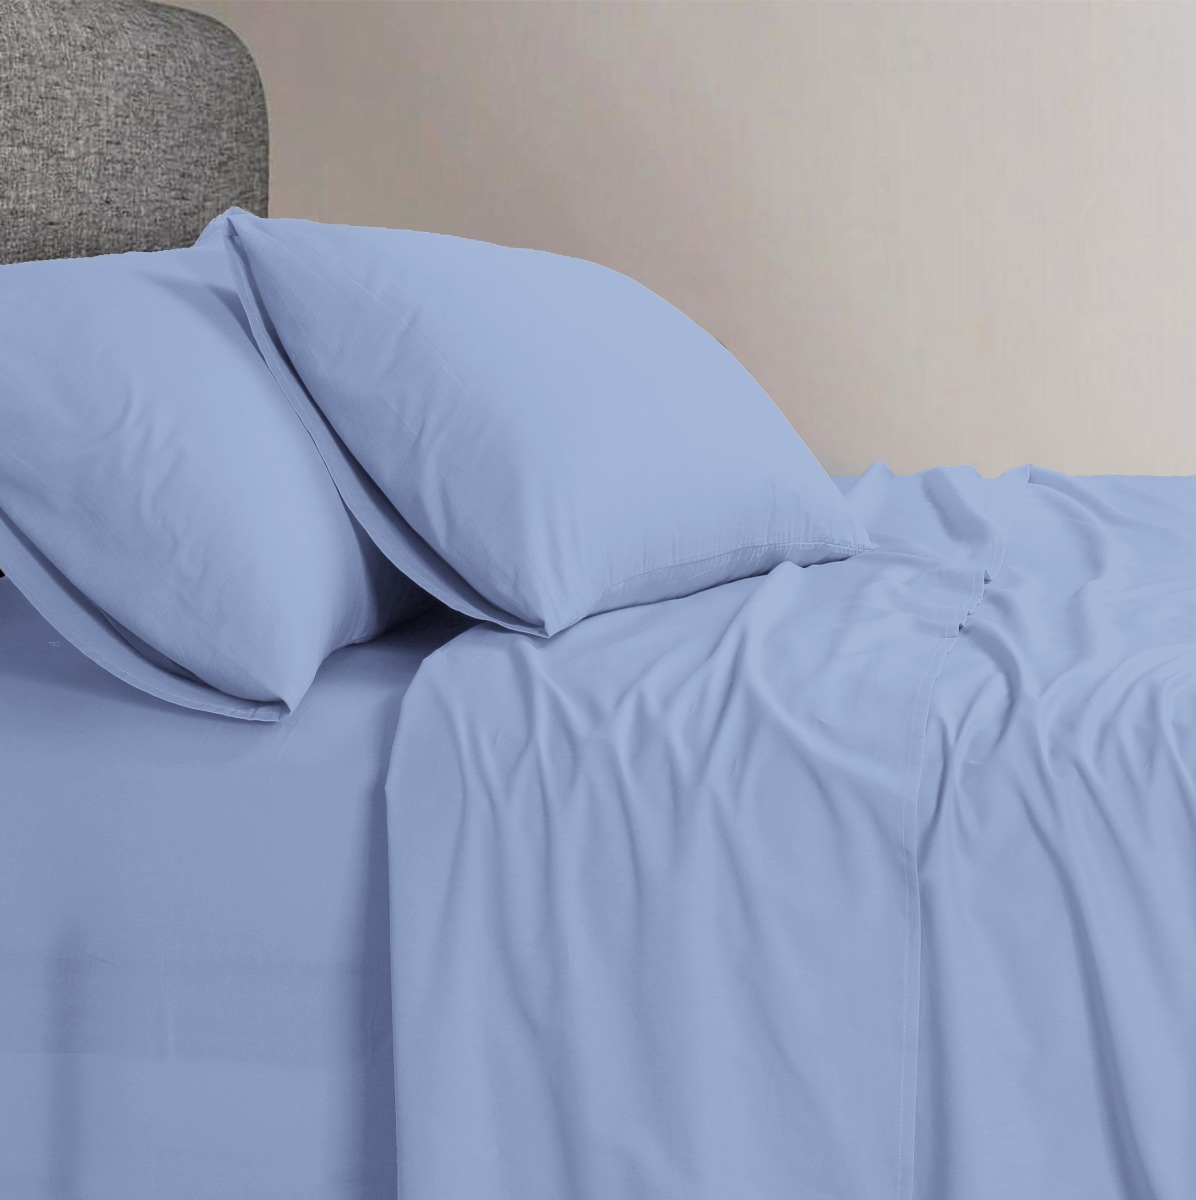 Elan Linen 1200TC Organic Cotton Sky Blue Bed Sheet Set – KING SINGLE